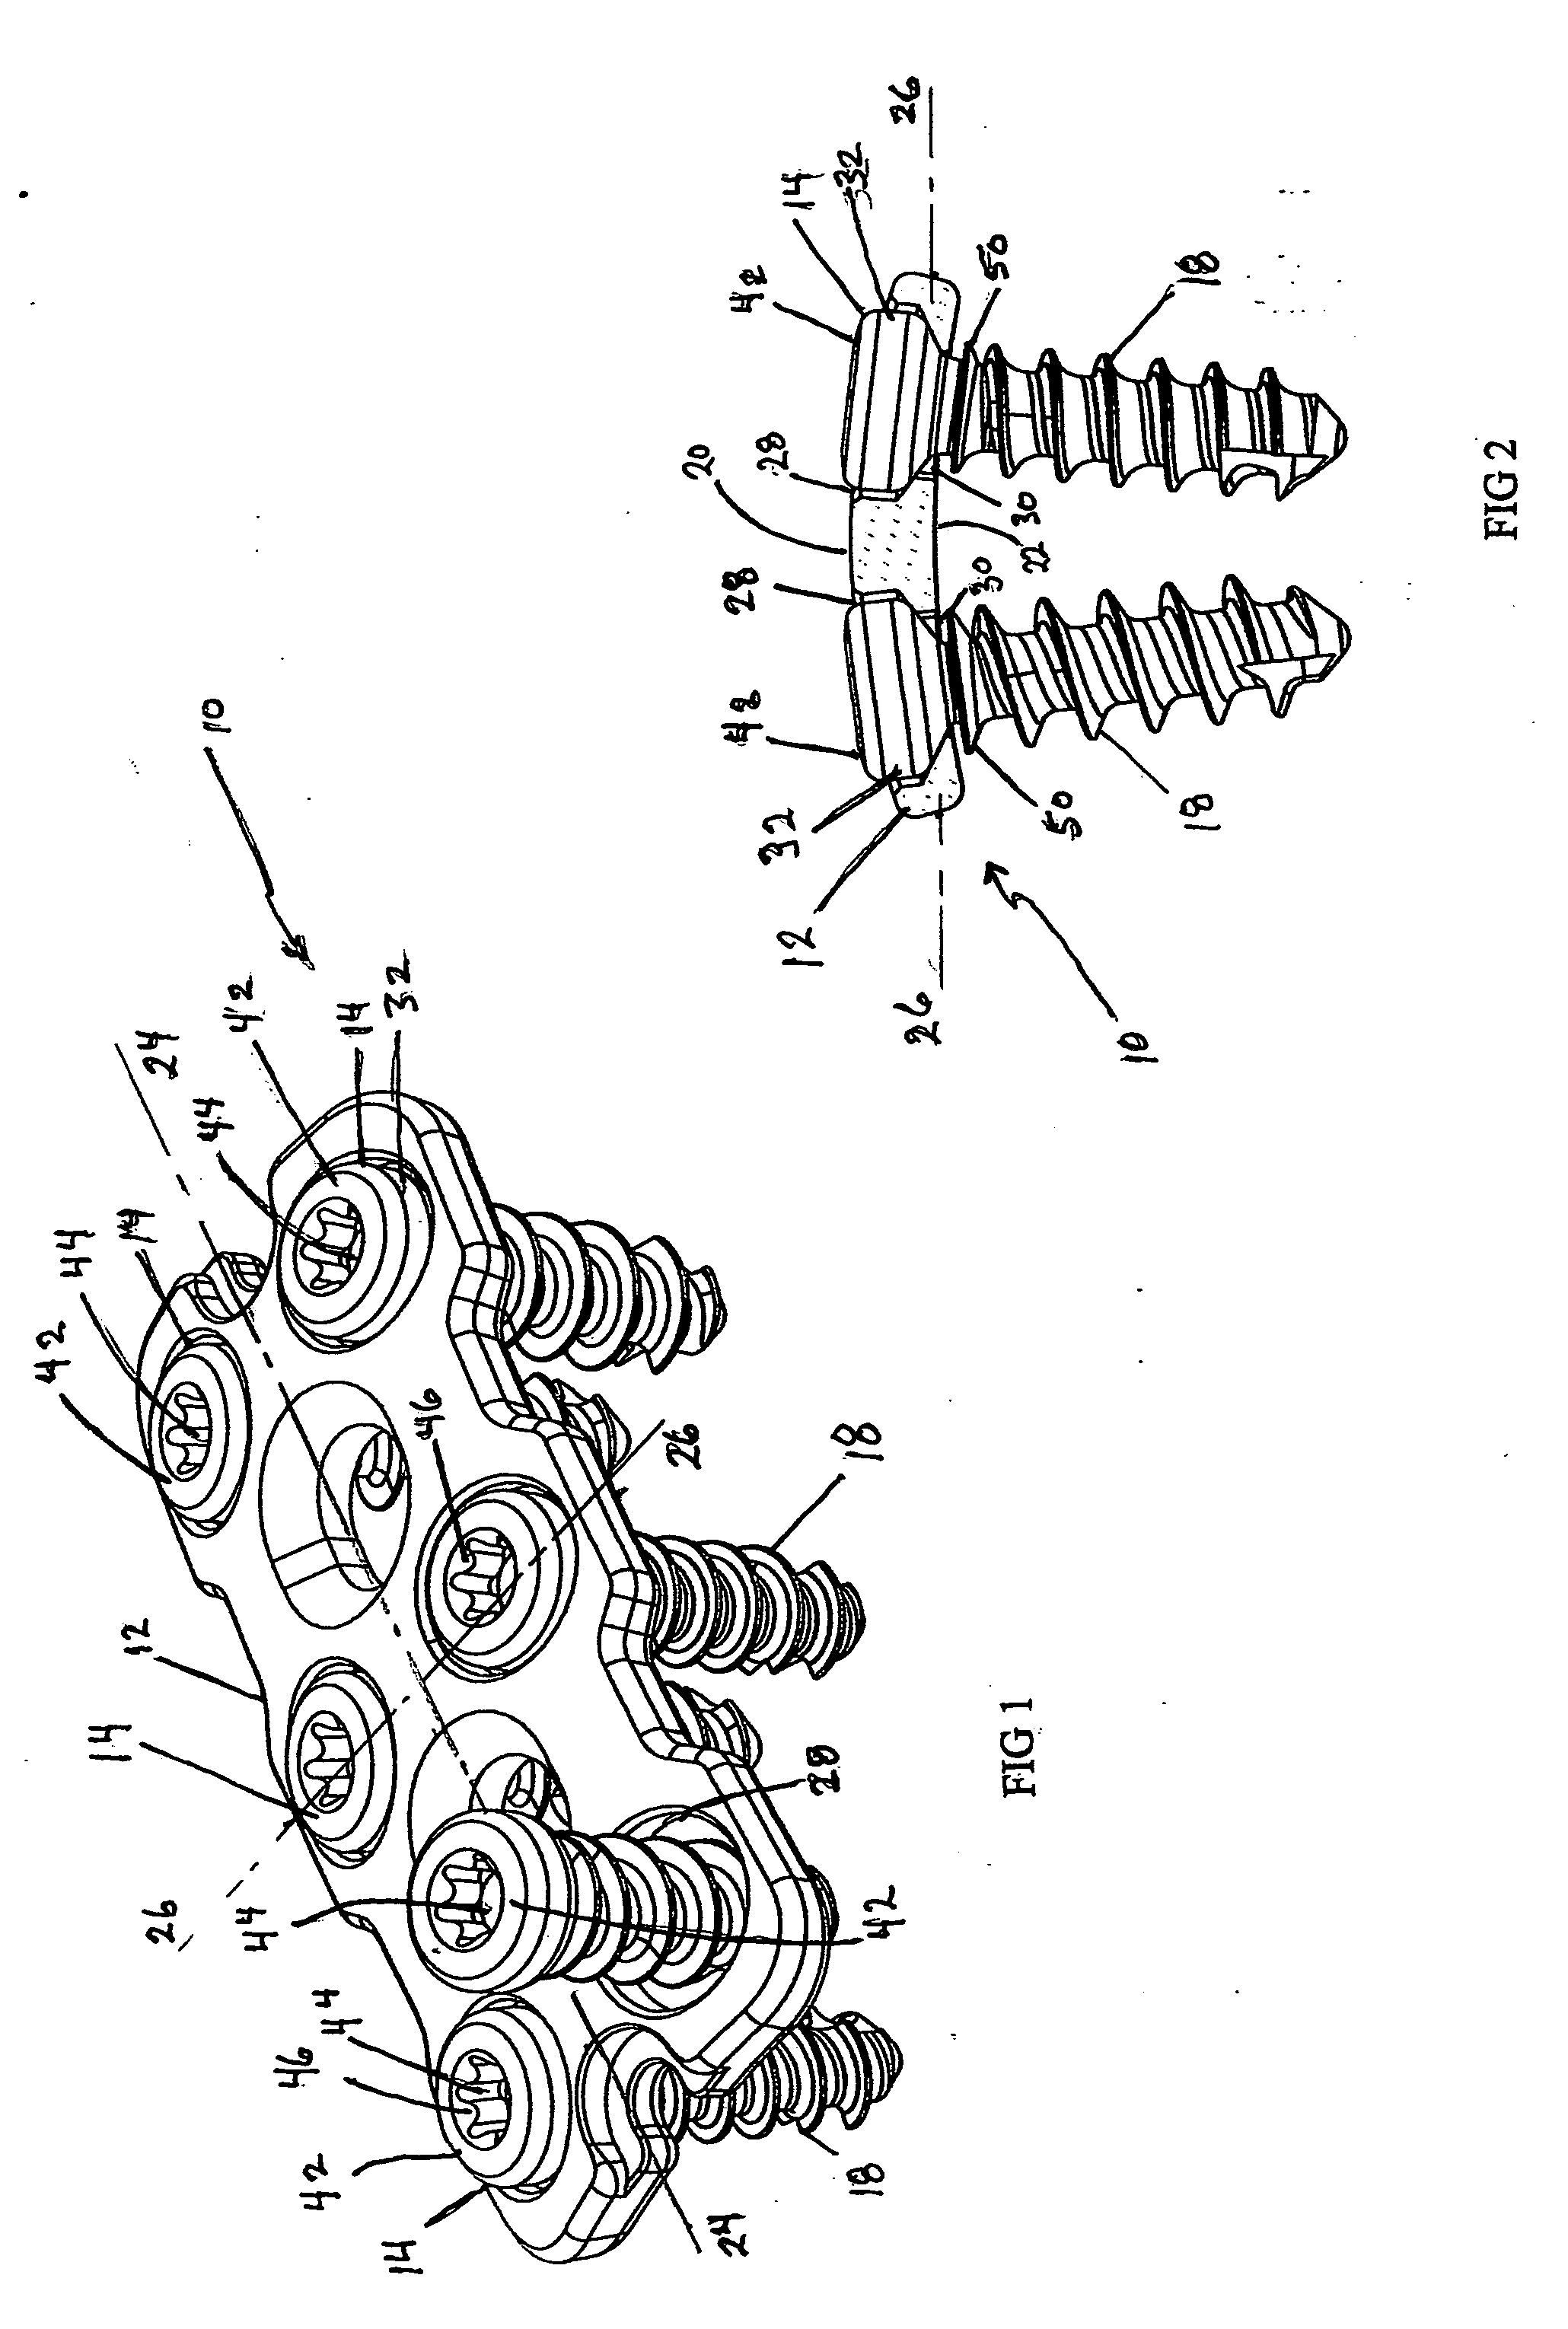 Anterior vertebral plate with closed thread screw